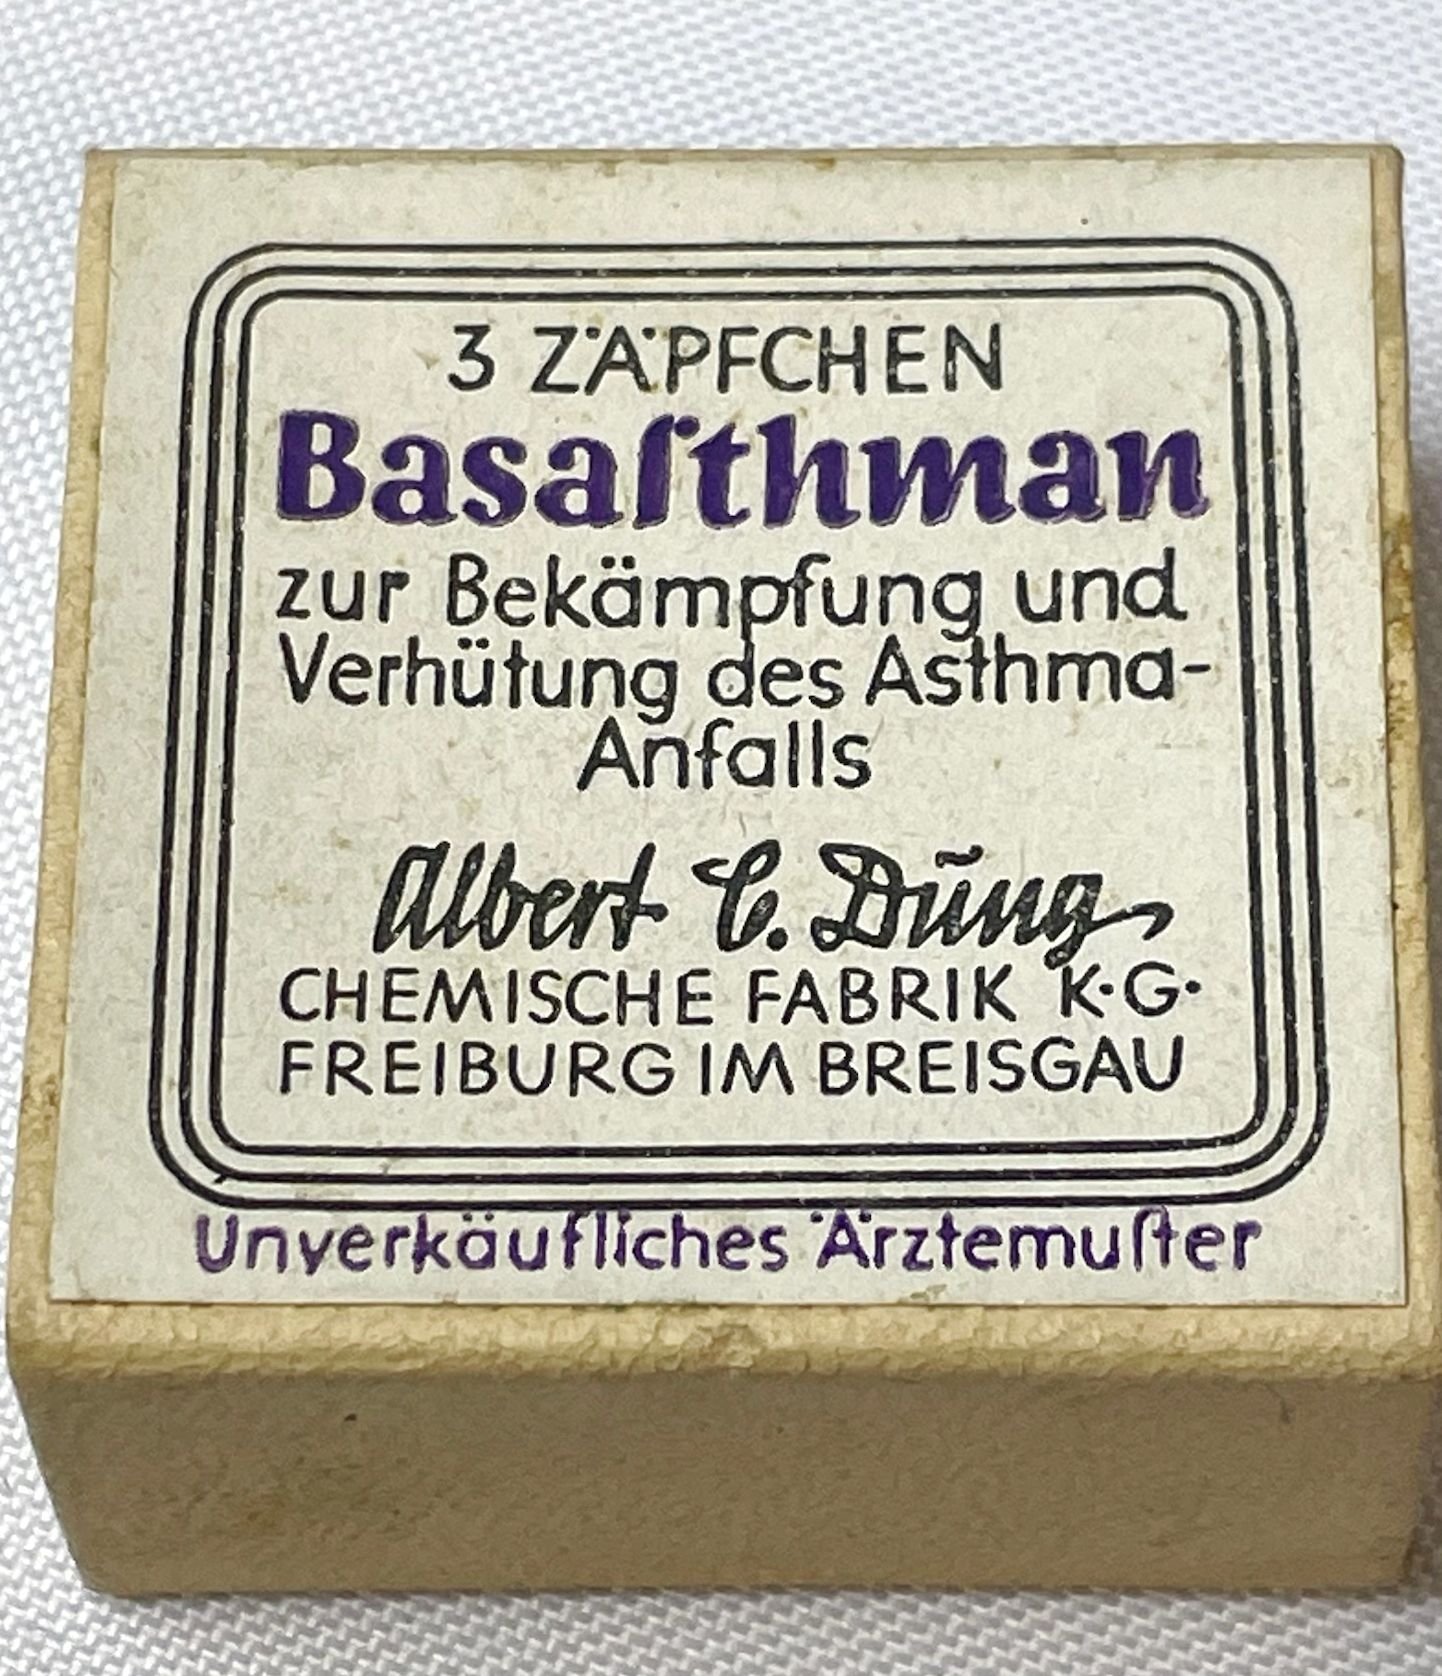 Basasthman (Krankenhausmuseum Bielefeld e.V. CC BY-NC-SA)